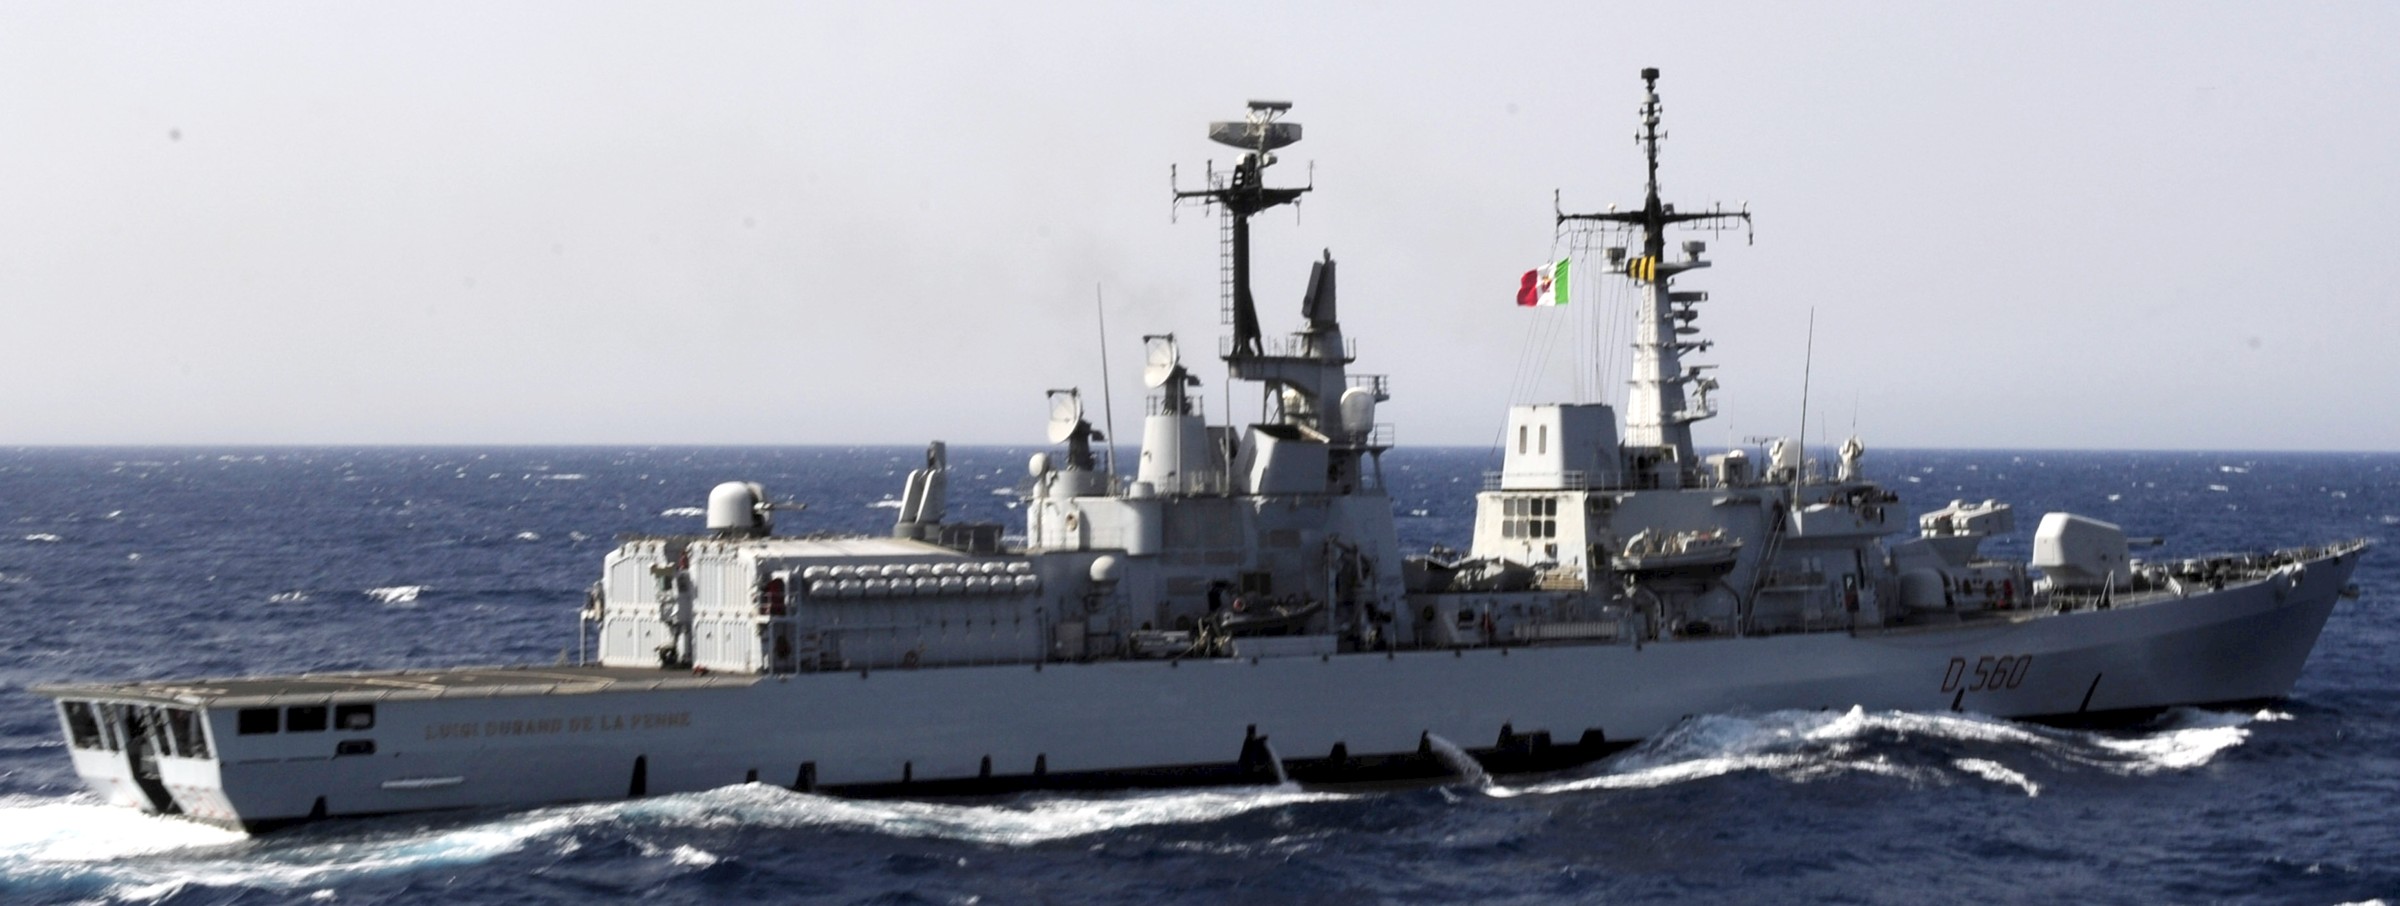 d-560 luigi durand de la penne its nave guided missile destroyer ddg italian navy marina militare 24